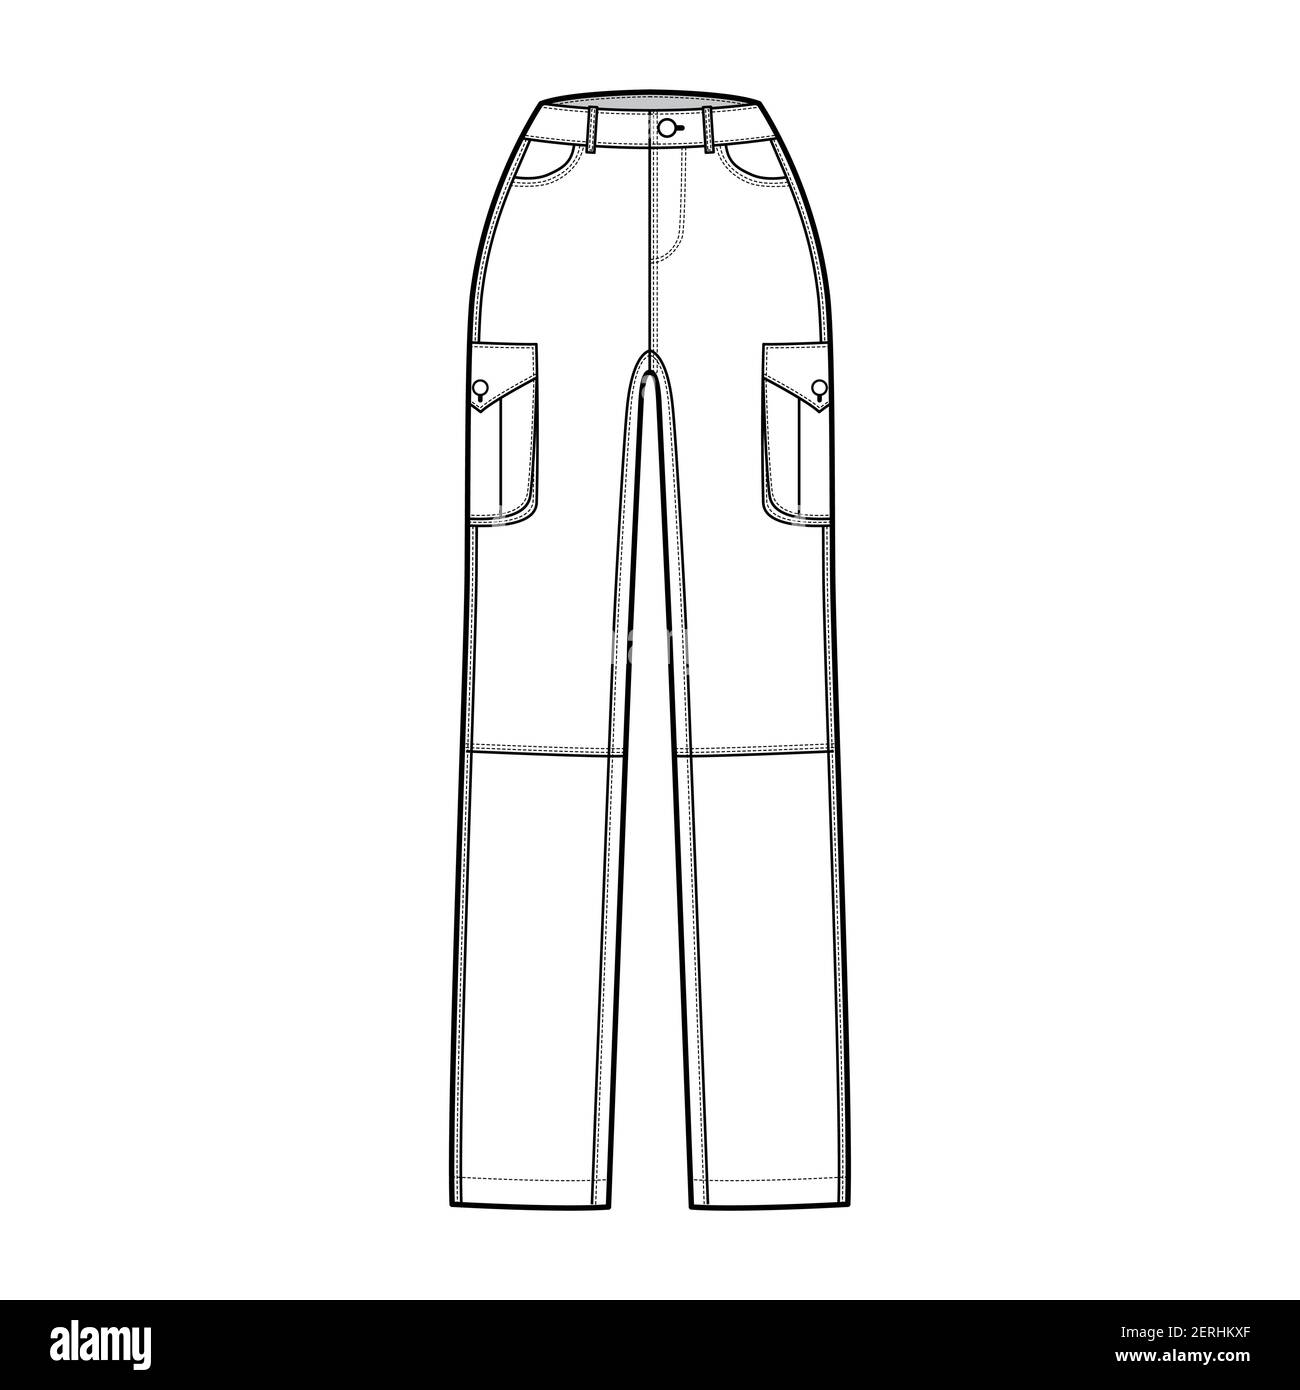 Denim Shorts Under Magnification Trouser Zipper Belt Loops and Stock  Image  Image of detail color 115497603